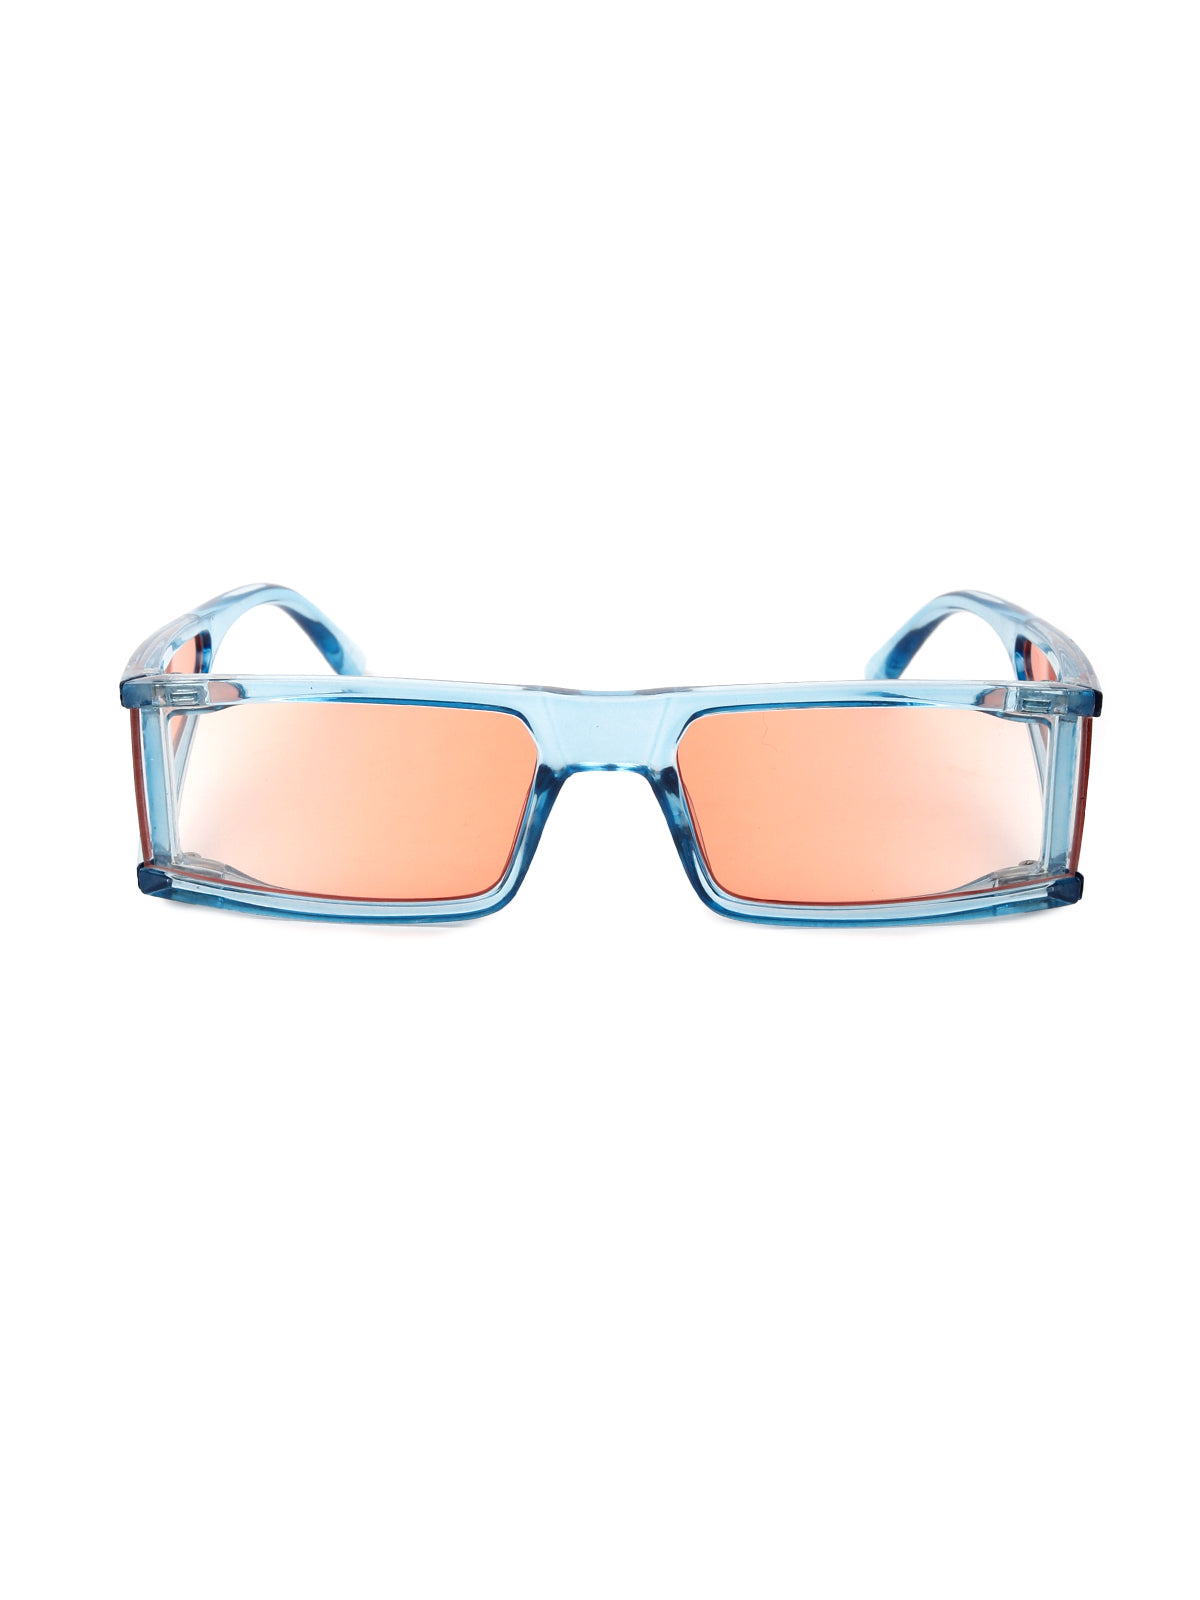 Odette Women Aqua Blue And Orange Rectangle Sunglasses